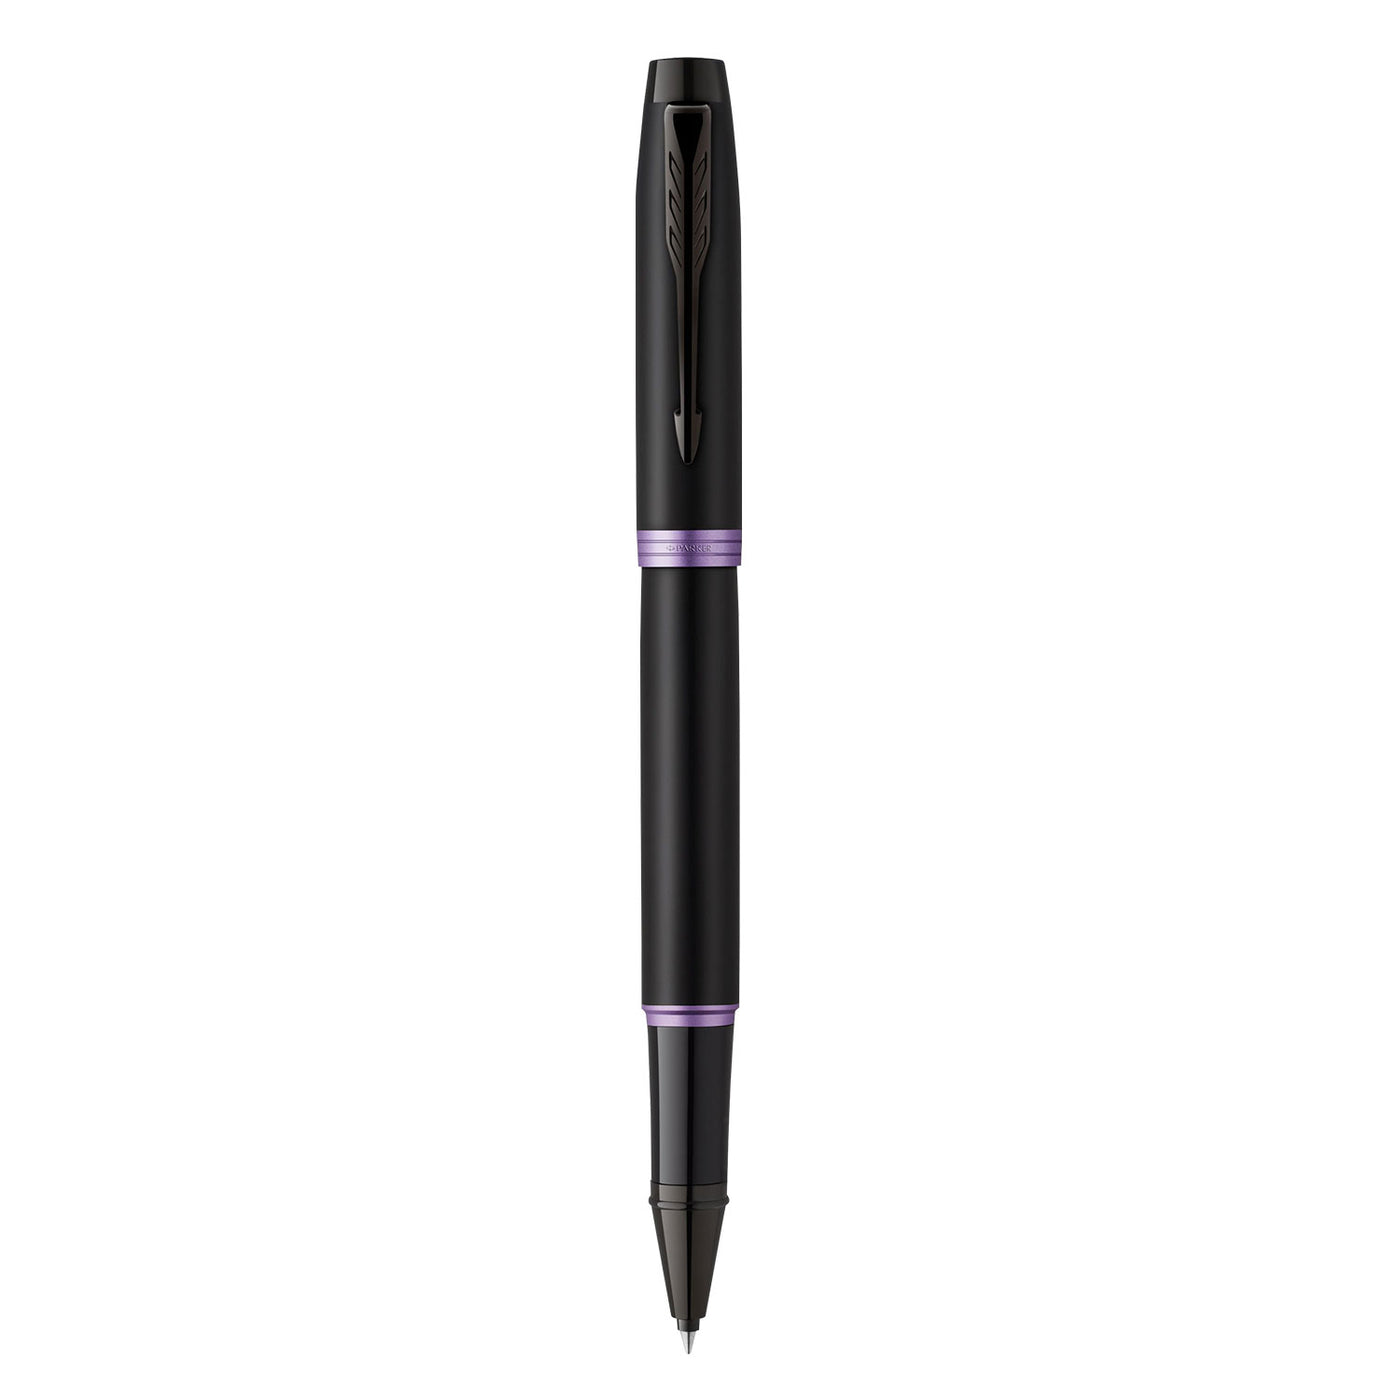 Parker IM Vibrant Rings Roller Ball Pen - Amethyst Purple Black BT